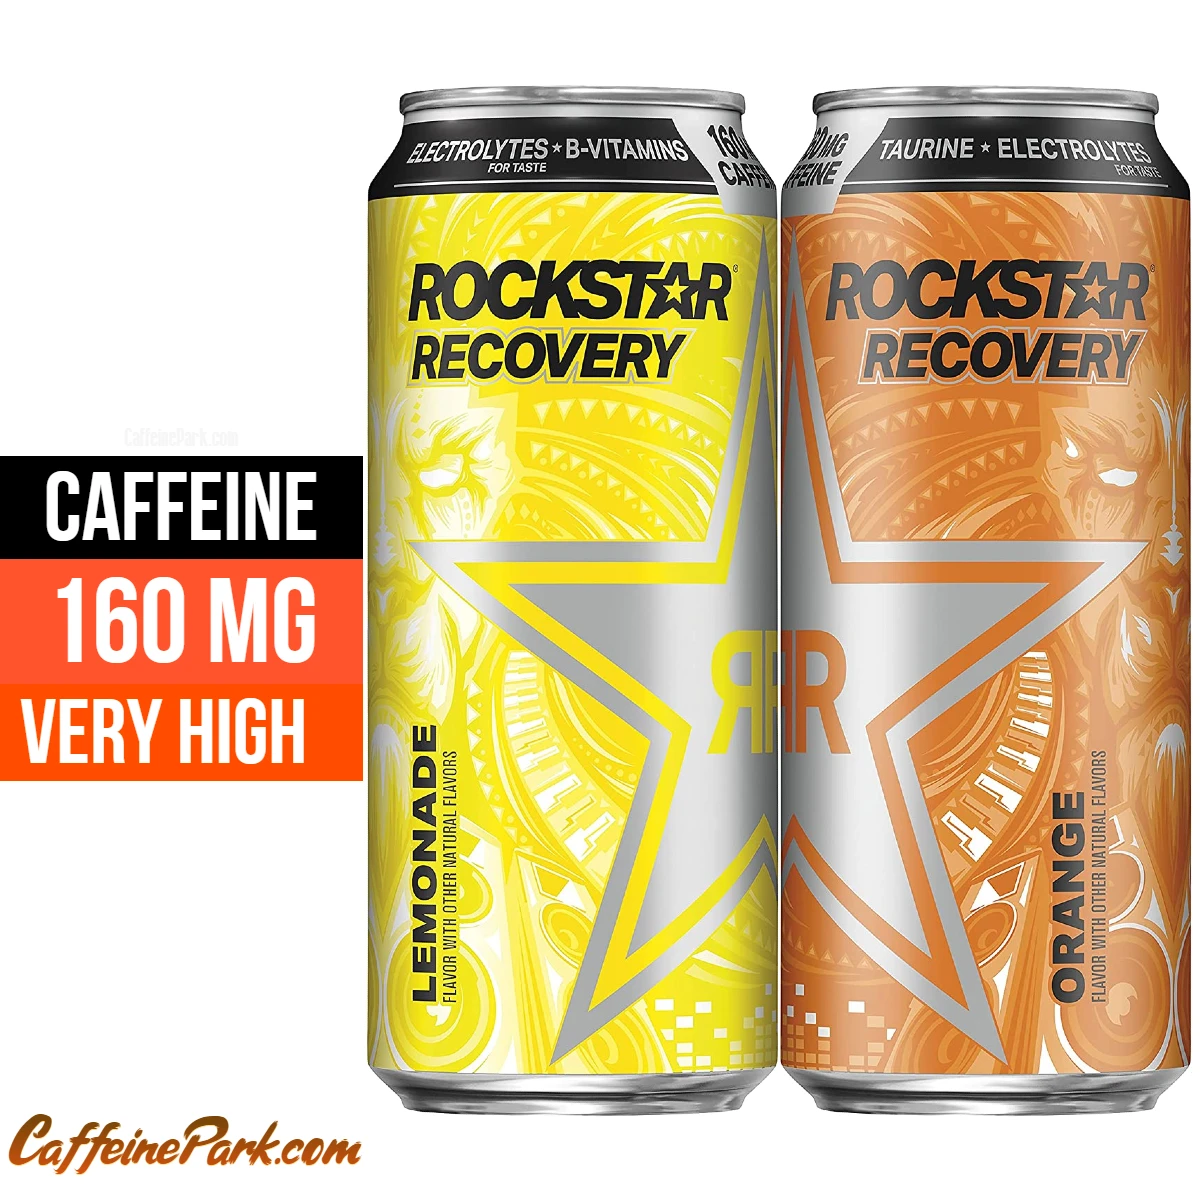 Rockstar Recovery Caffeine Content